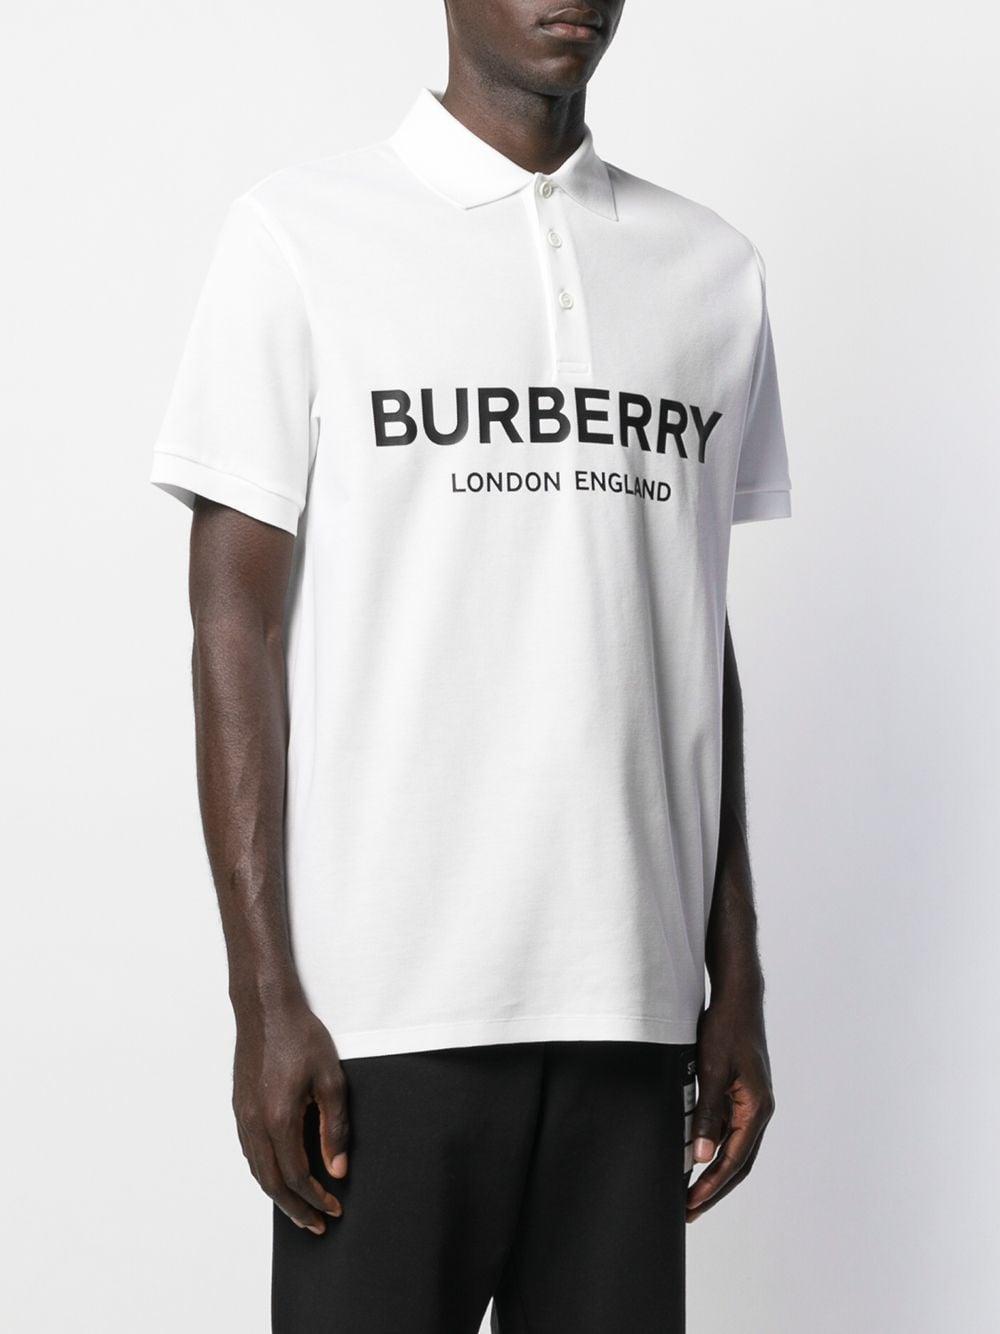 burberry print polo shirt - OFF-51% > Shipping free